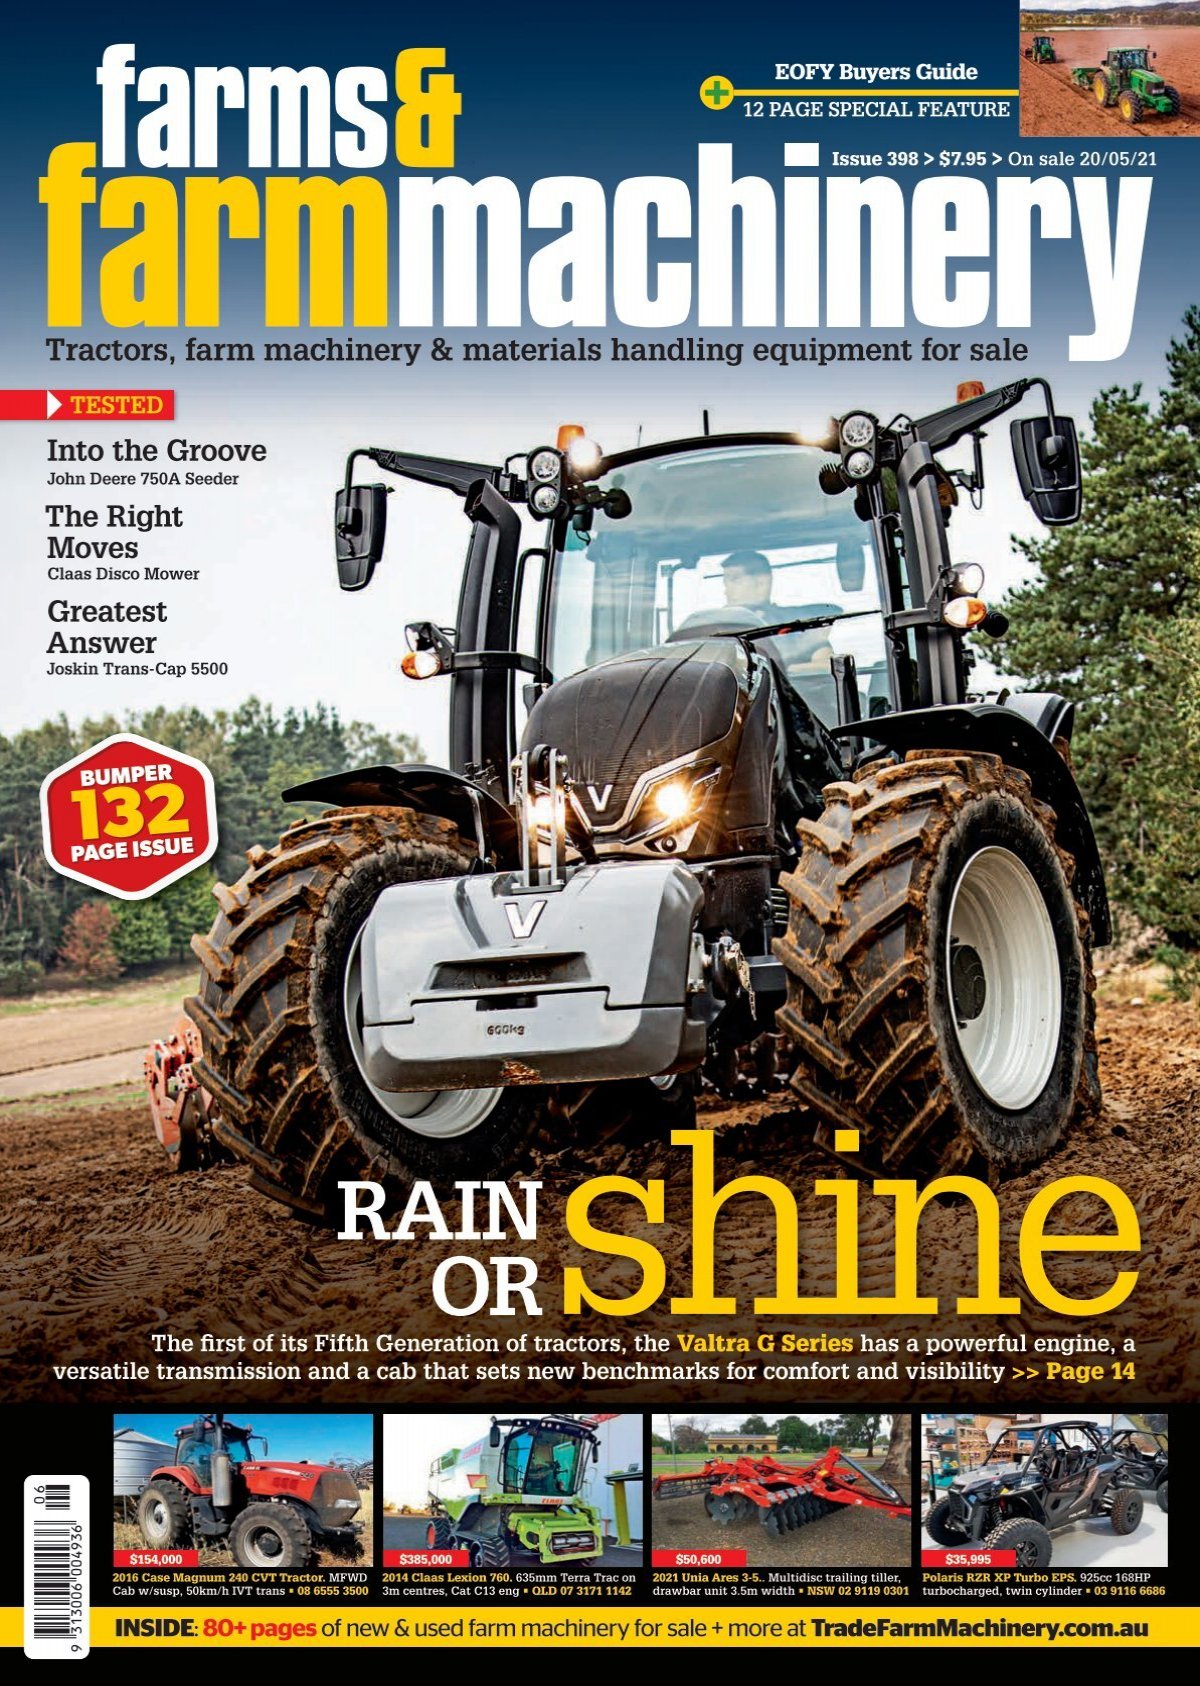 On test: John Deere's 6R 185 tractor - Farmers Weekly